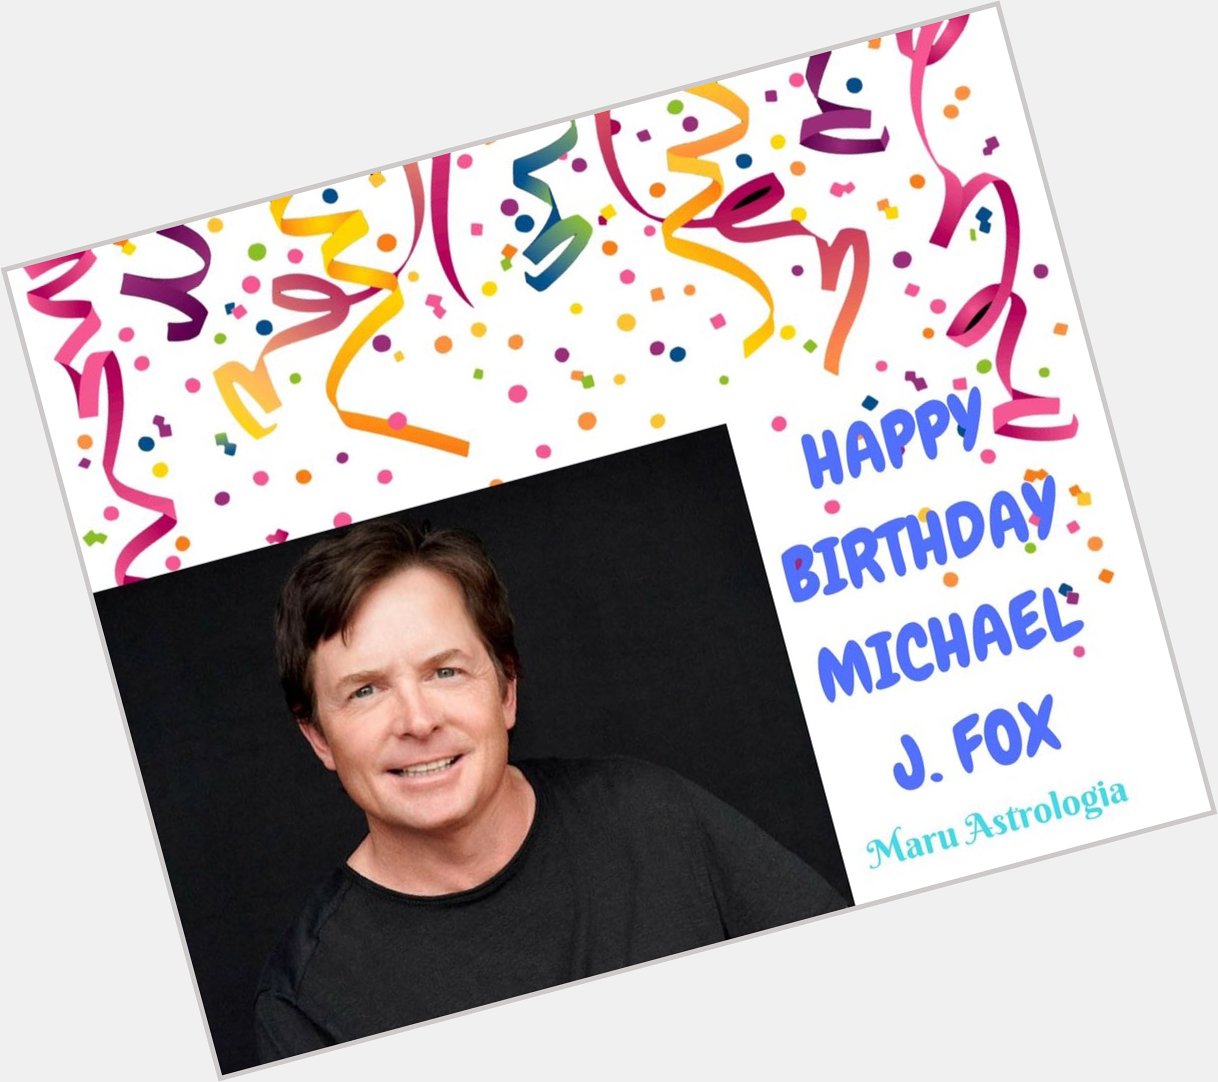 HAPPY BIRTHDAY MICHAEL J. FOX!!!   